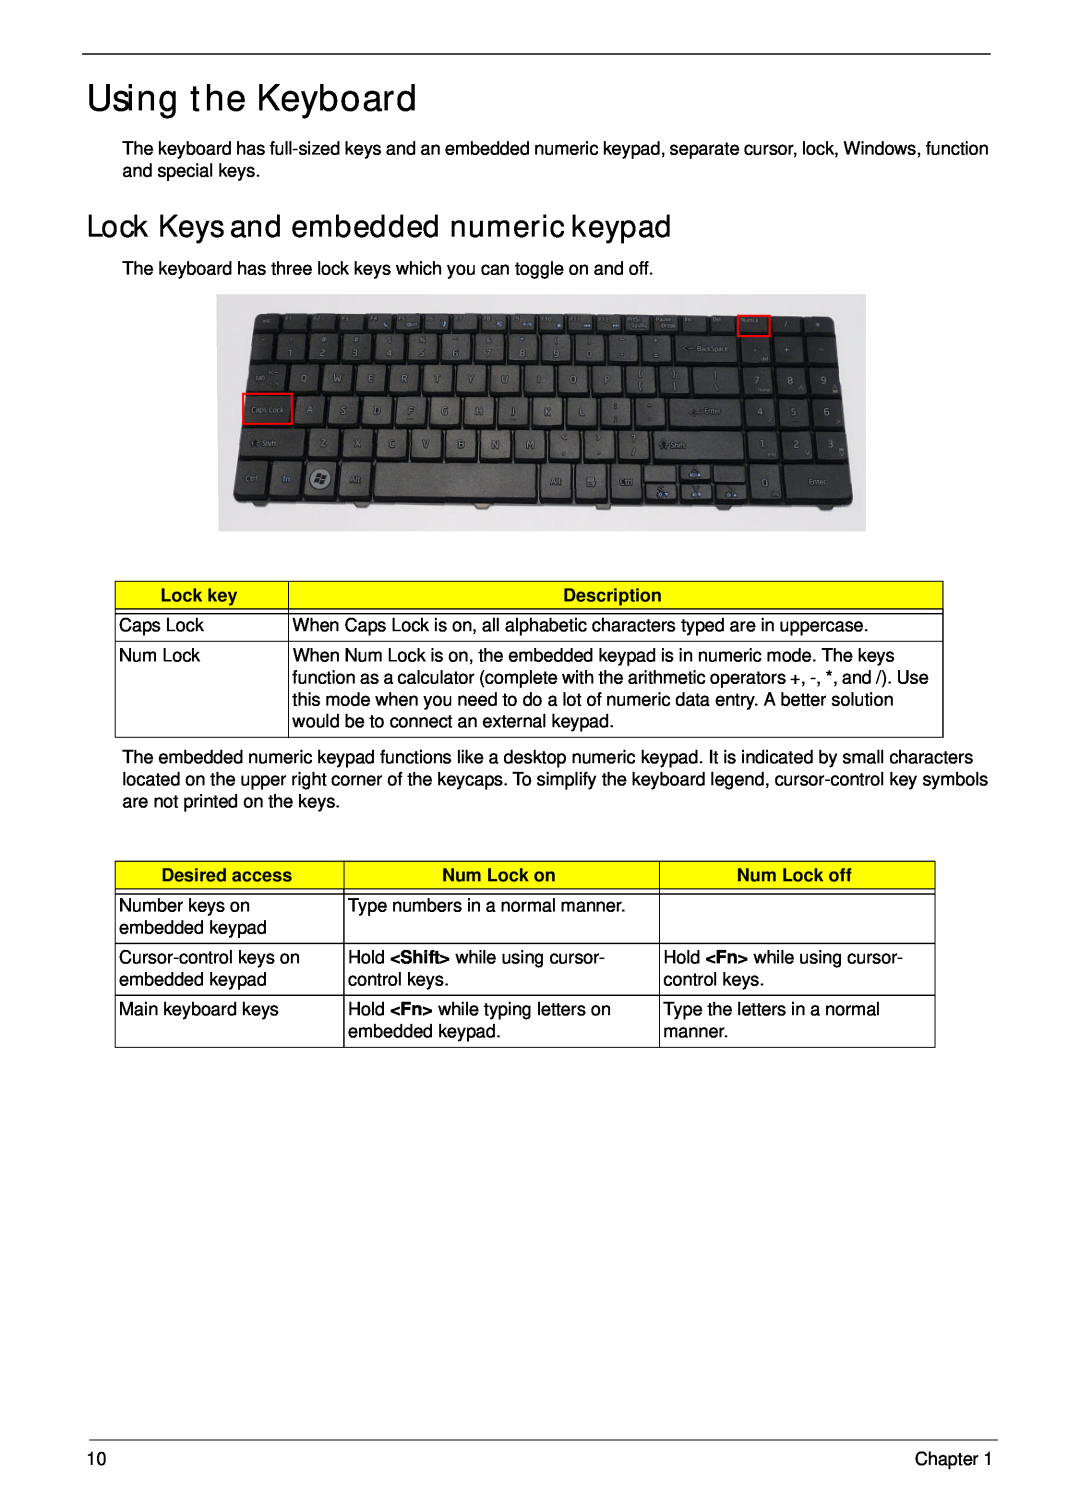 Acer 7715Z Using the Keyboard, Lock Keys and embedded numeric keypad, Lock key, Description, Desired access, Num Lock on 